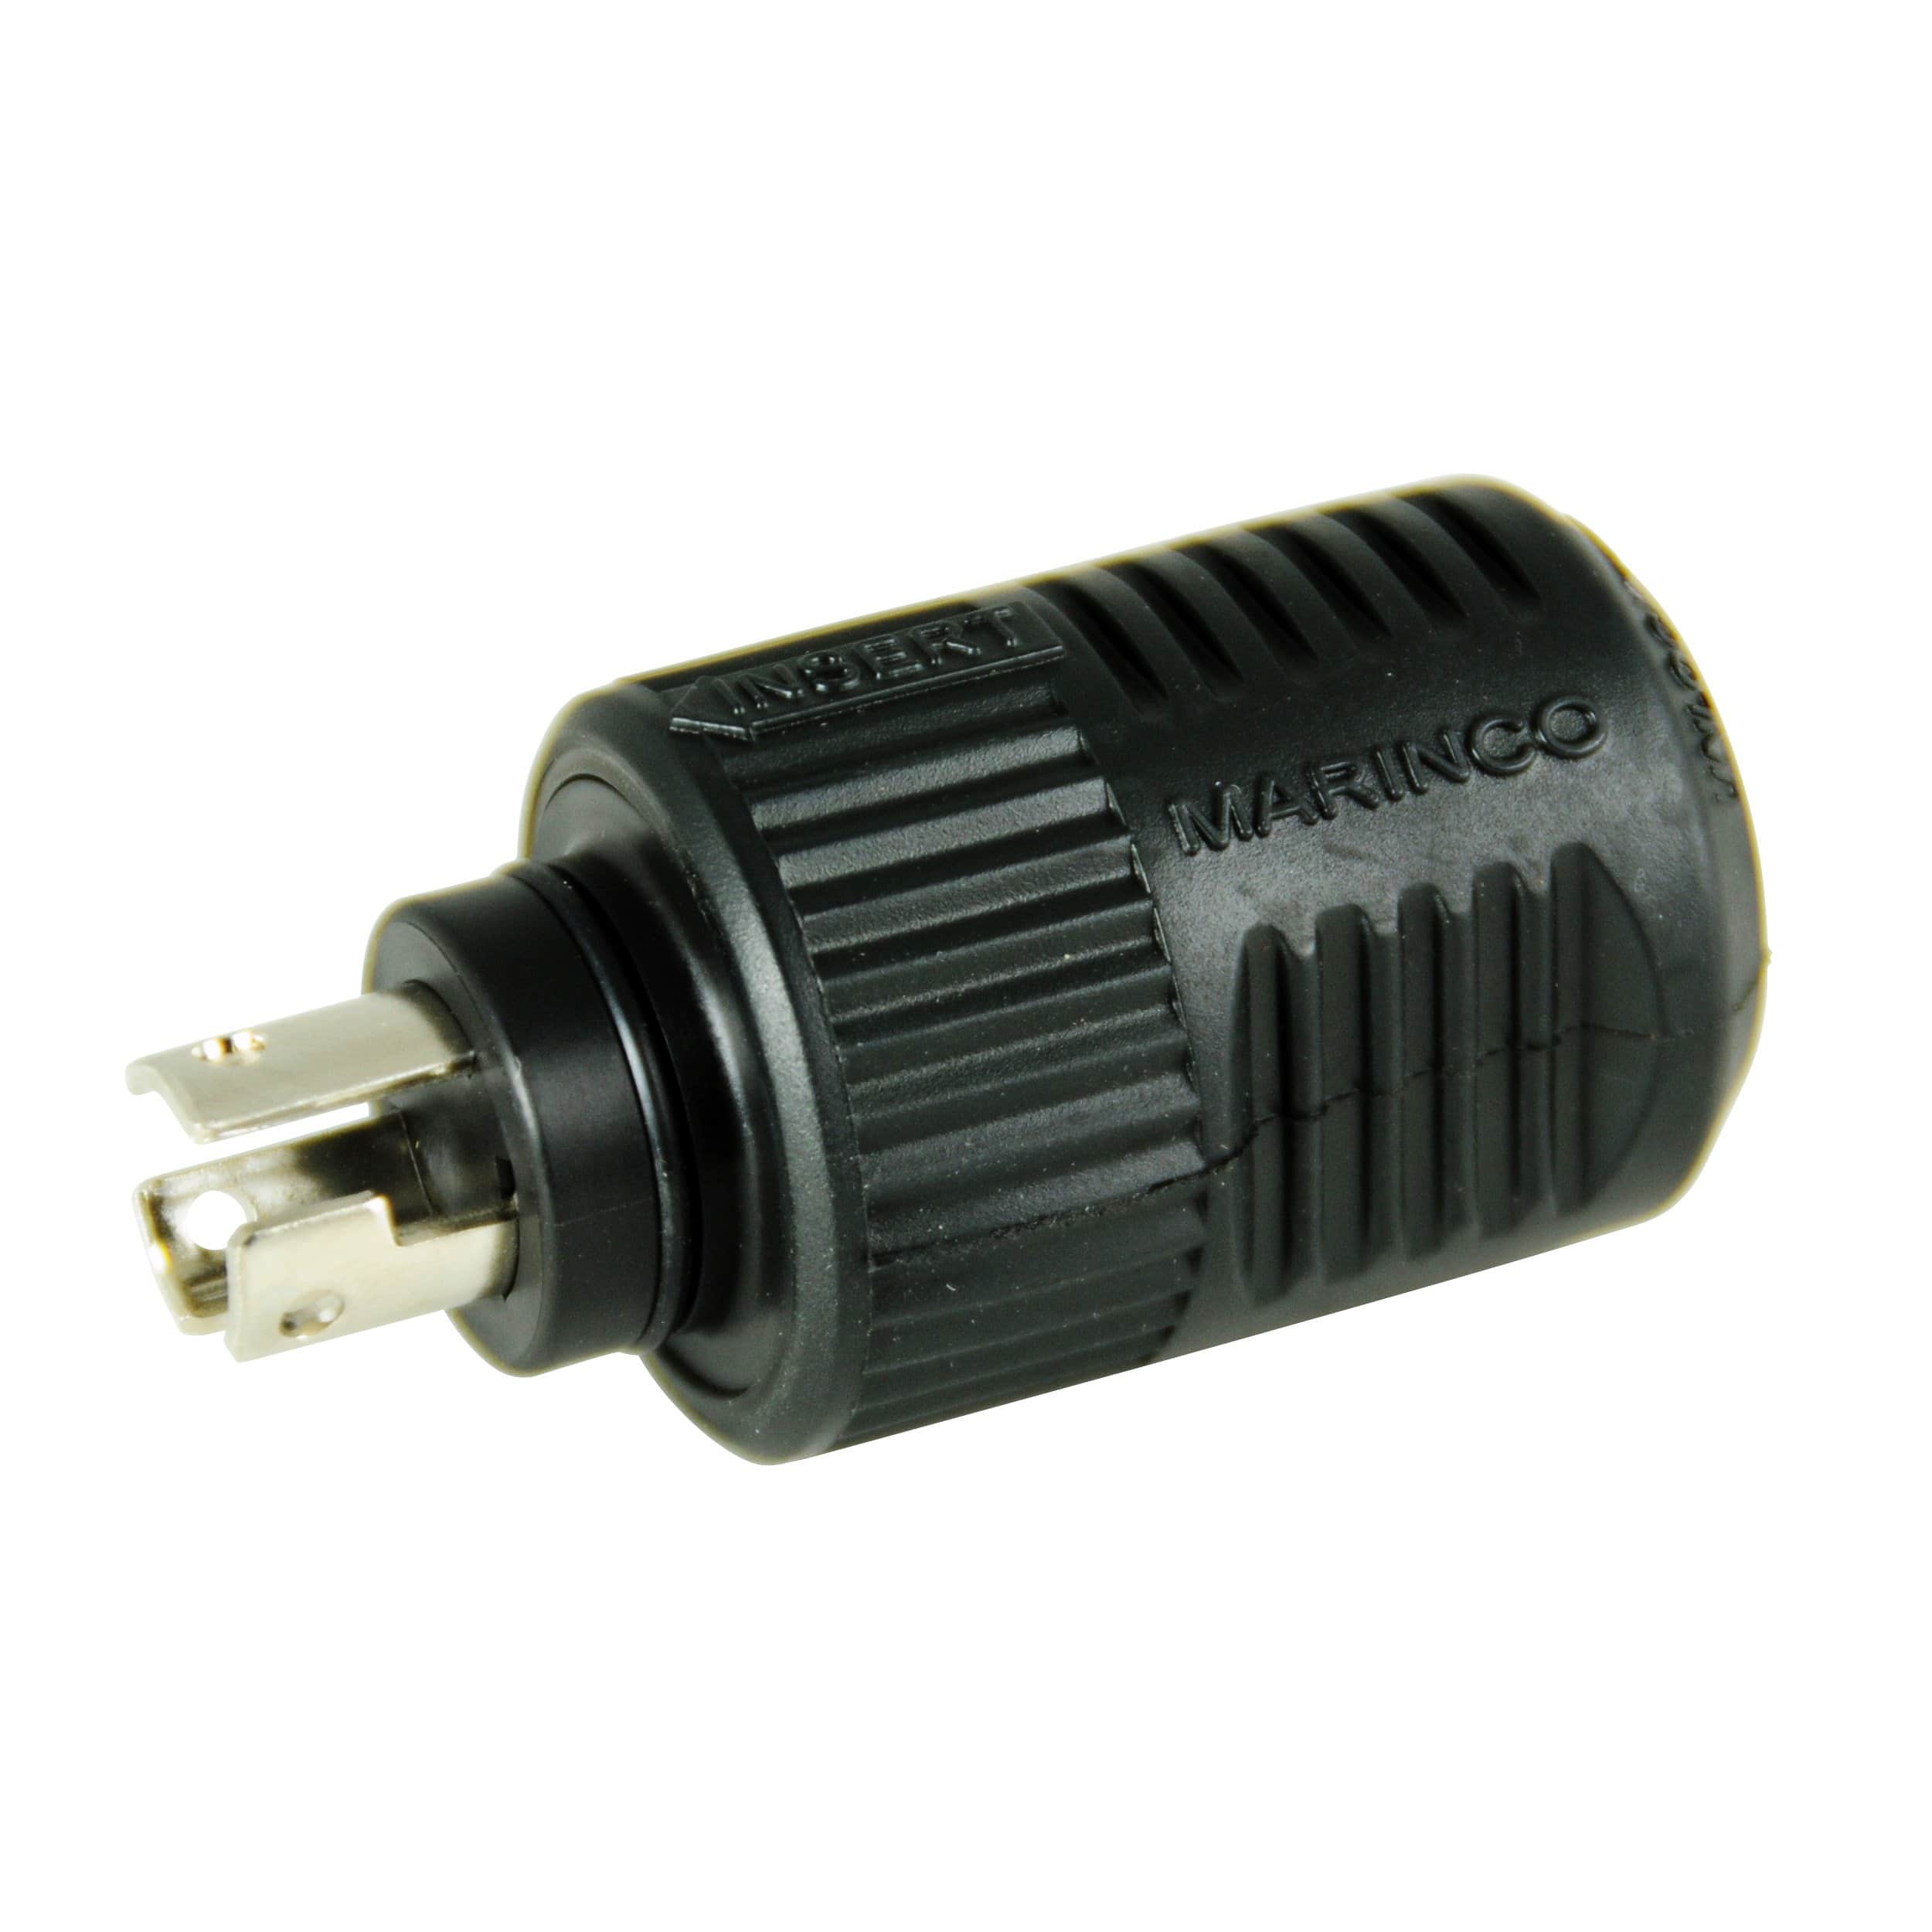 Power Products Marinco 12VBP 3-Wire ConnectPro Plug